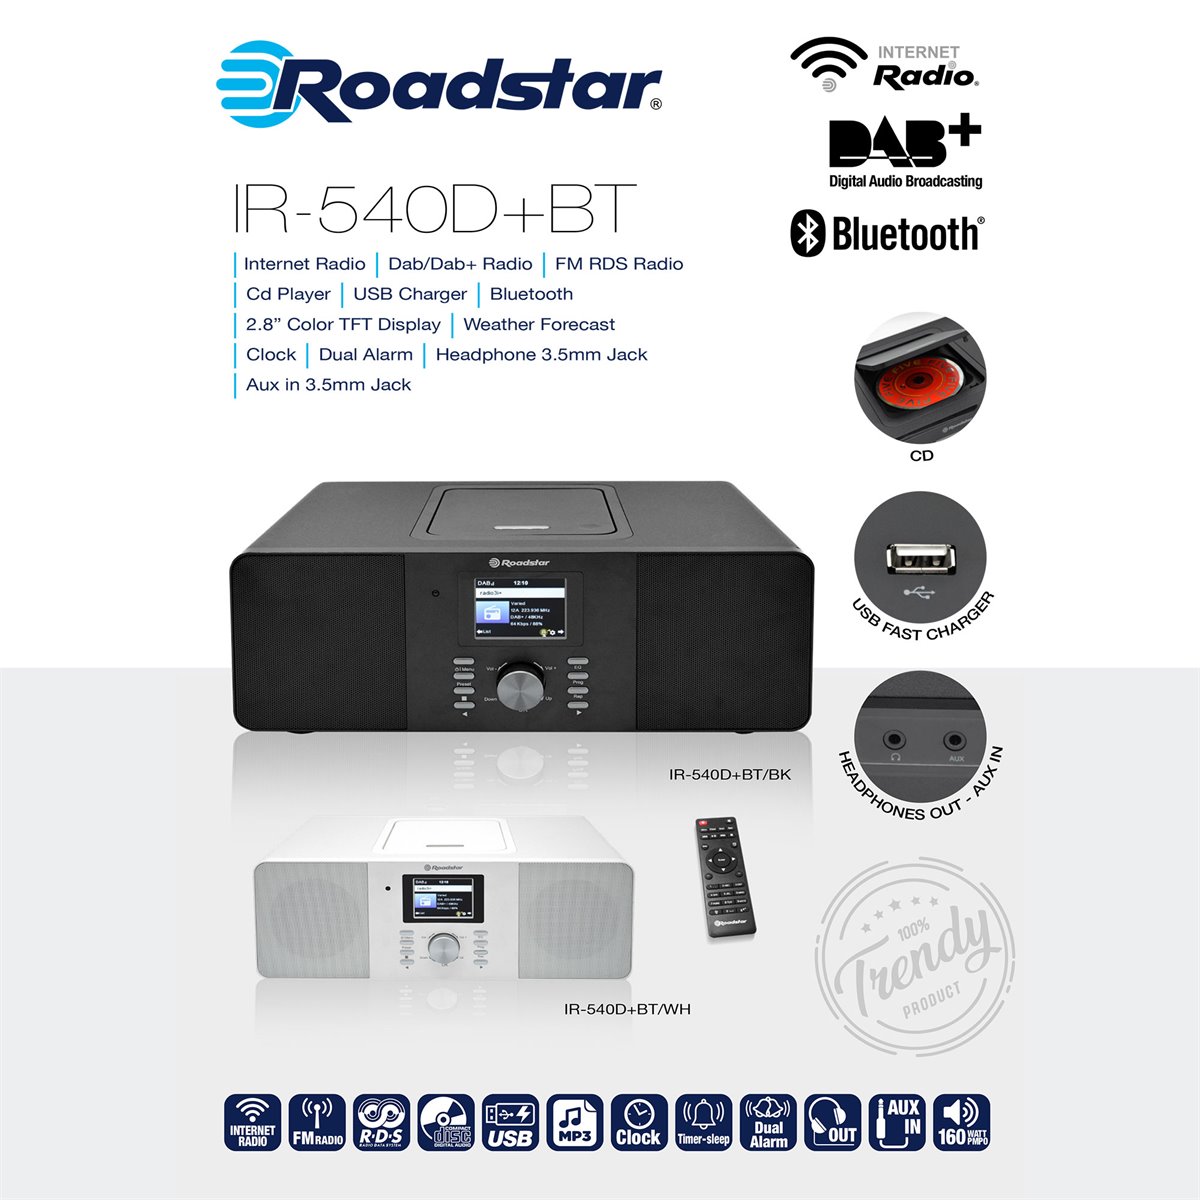 Roadstar HRA-270CD-MP3CD+BT Radio CD Portátil Vintage Digital DAB/DAB+/FM Reproductor  CD-MP3 Bluetooth USB, Mando Distancia, , Madera - Conforama